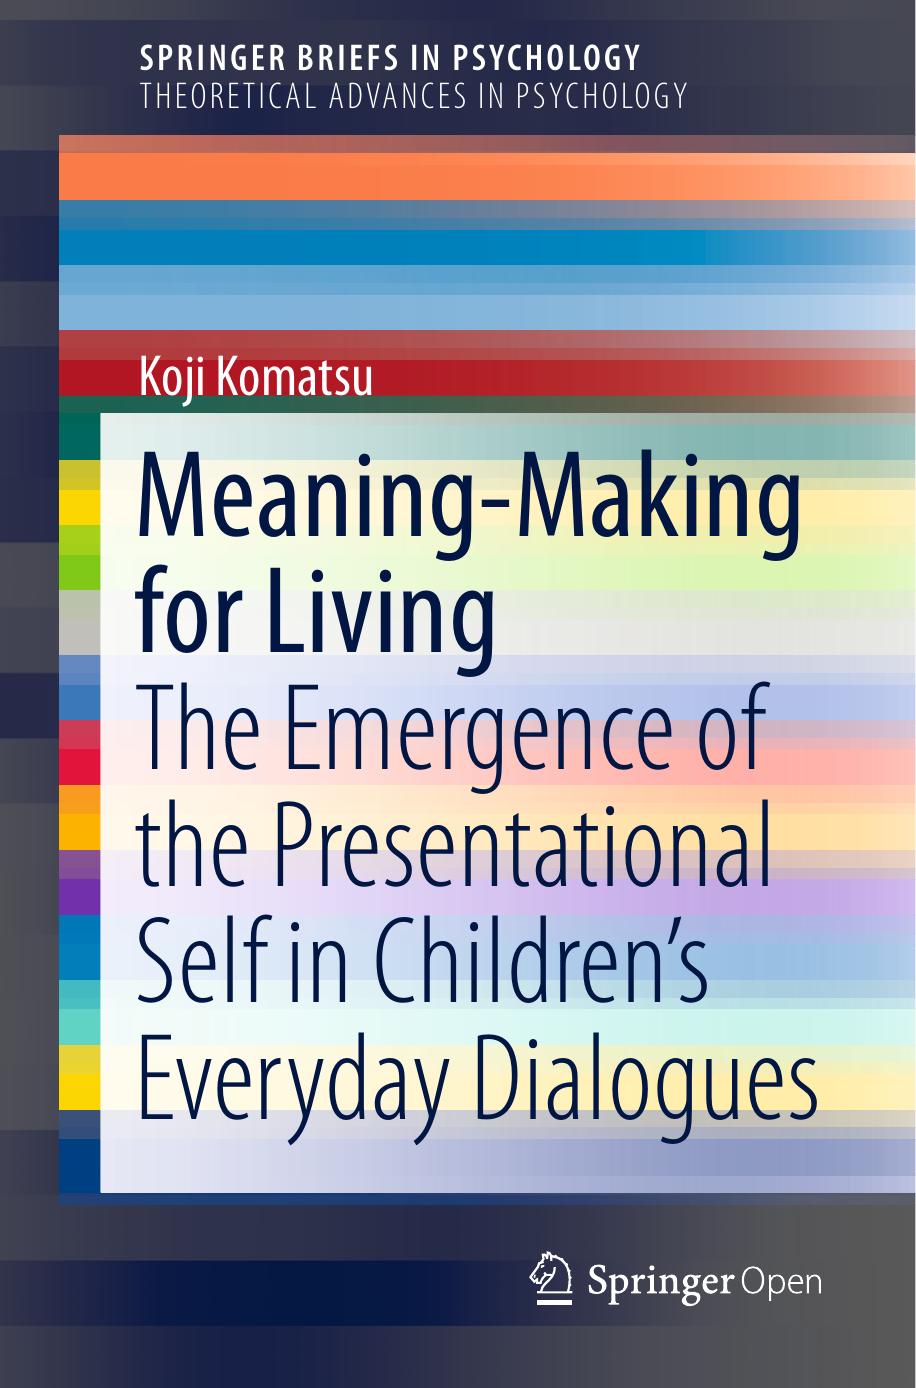 Meaning-Making for Living by Koji Komatsu